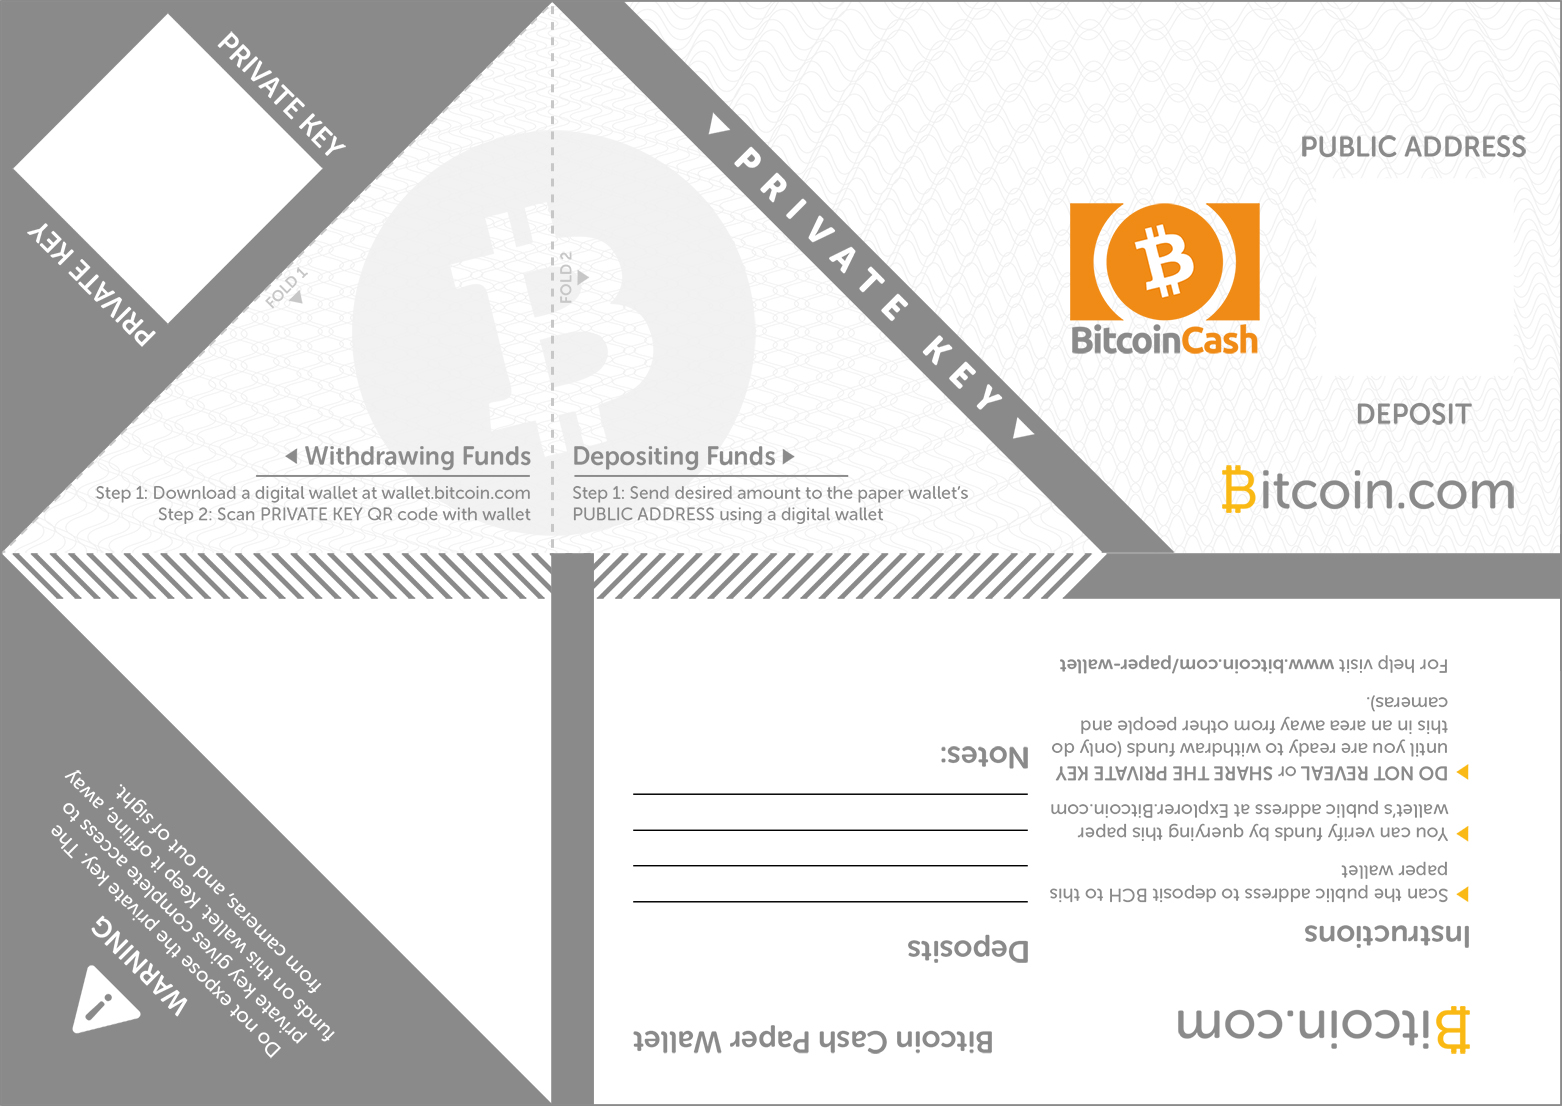 Bitcoin.com's Paper Wallet Design Contest — Win $100 in Bitcoin Cash